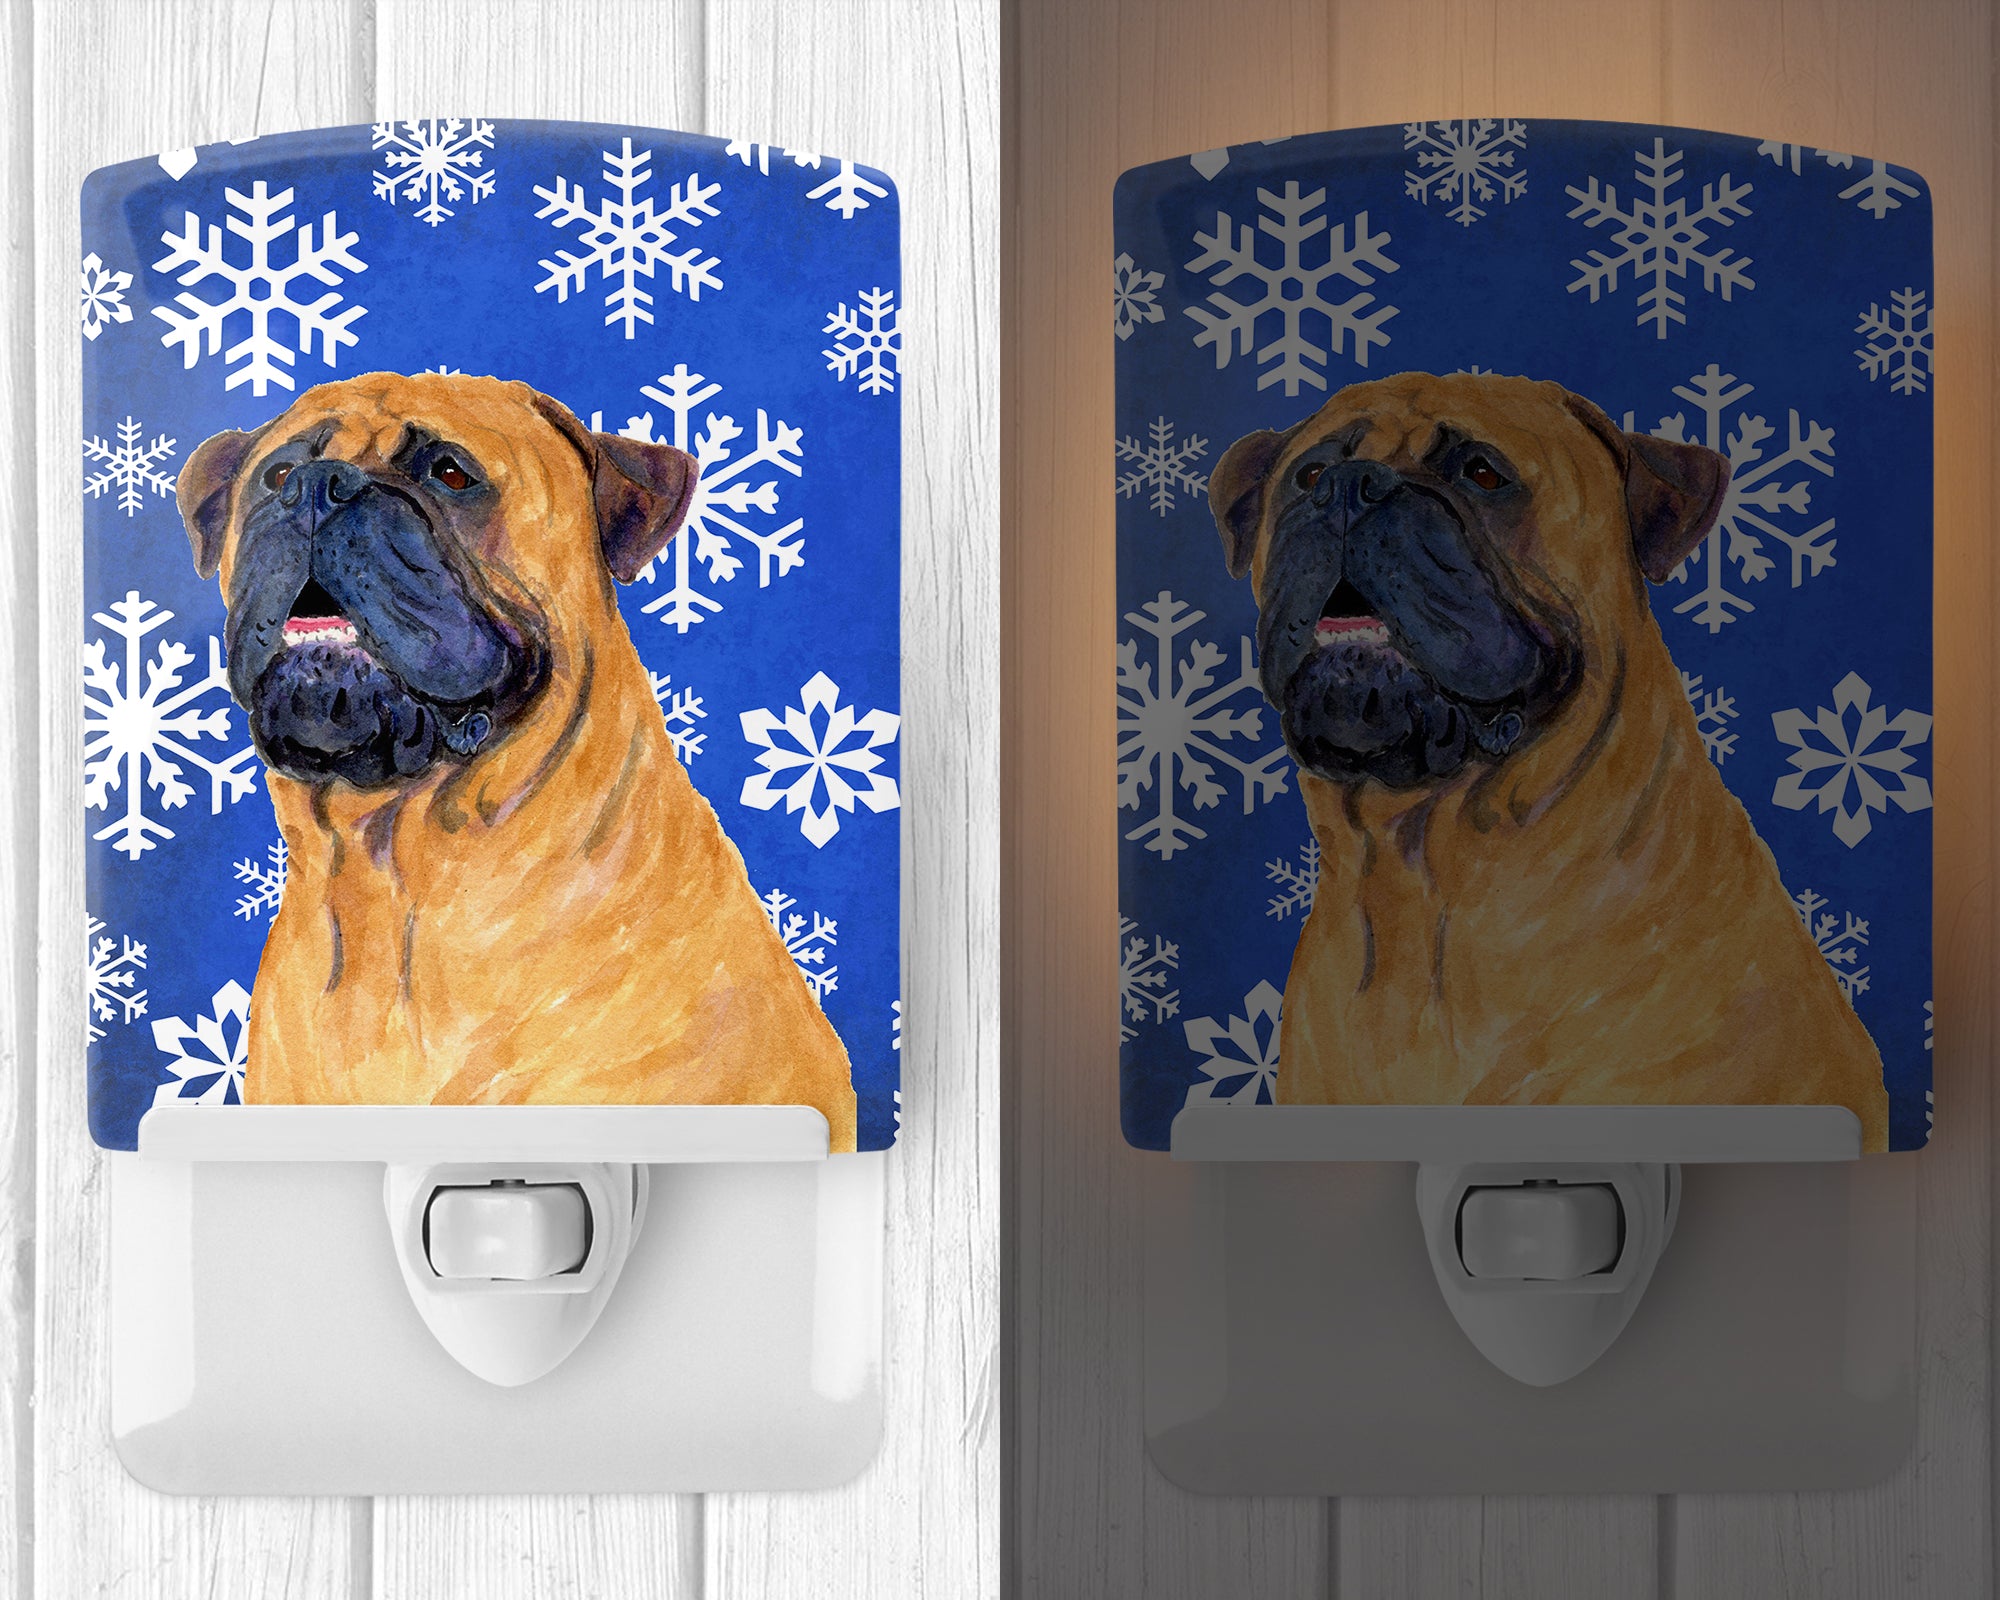 Mastiff Winter Snowflakes Holiday Ceramic Night Light SS4658CNL - the-store.com